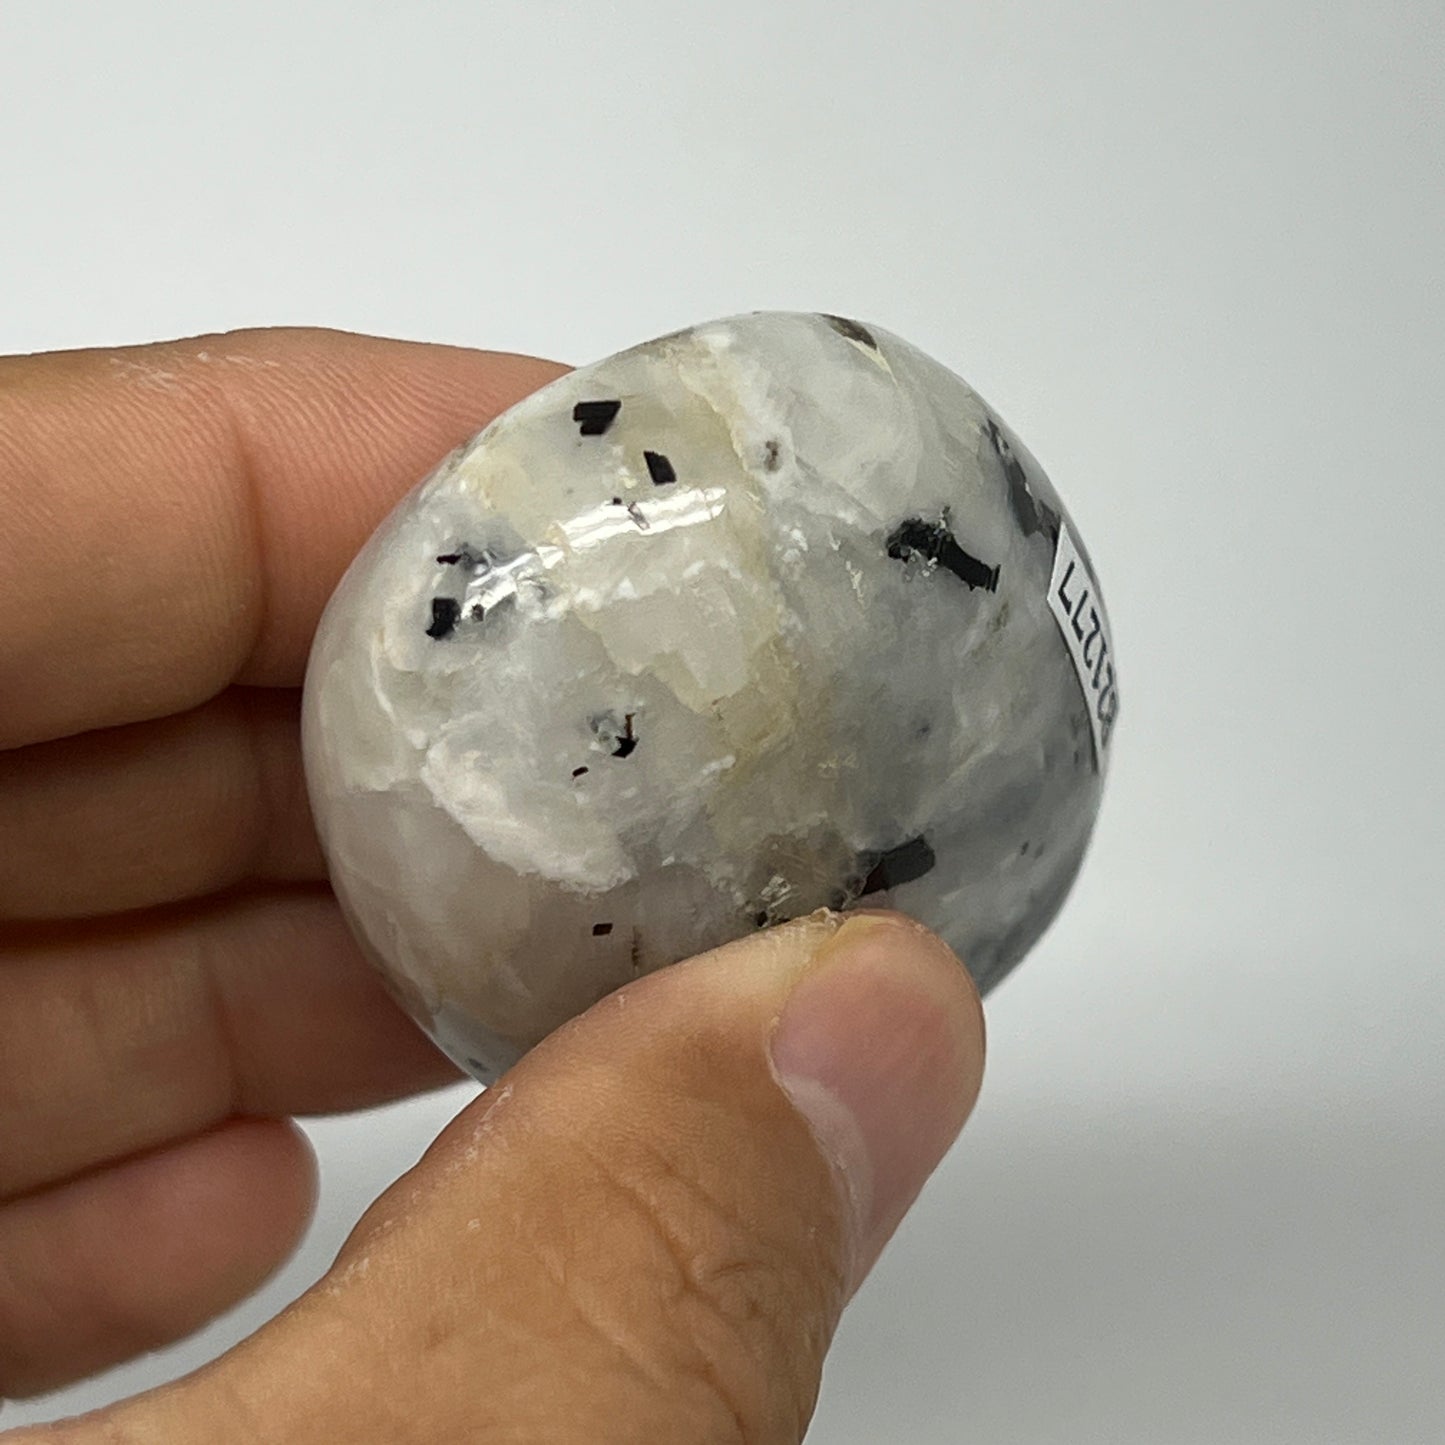 76.8g,2.2"x1.5"x0.9", Rainbow Moonstone Palm-Stone Polished from India, B21277